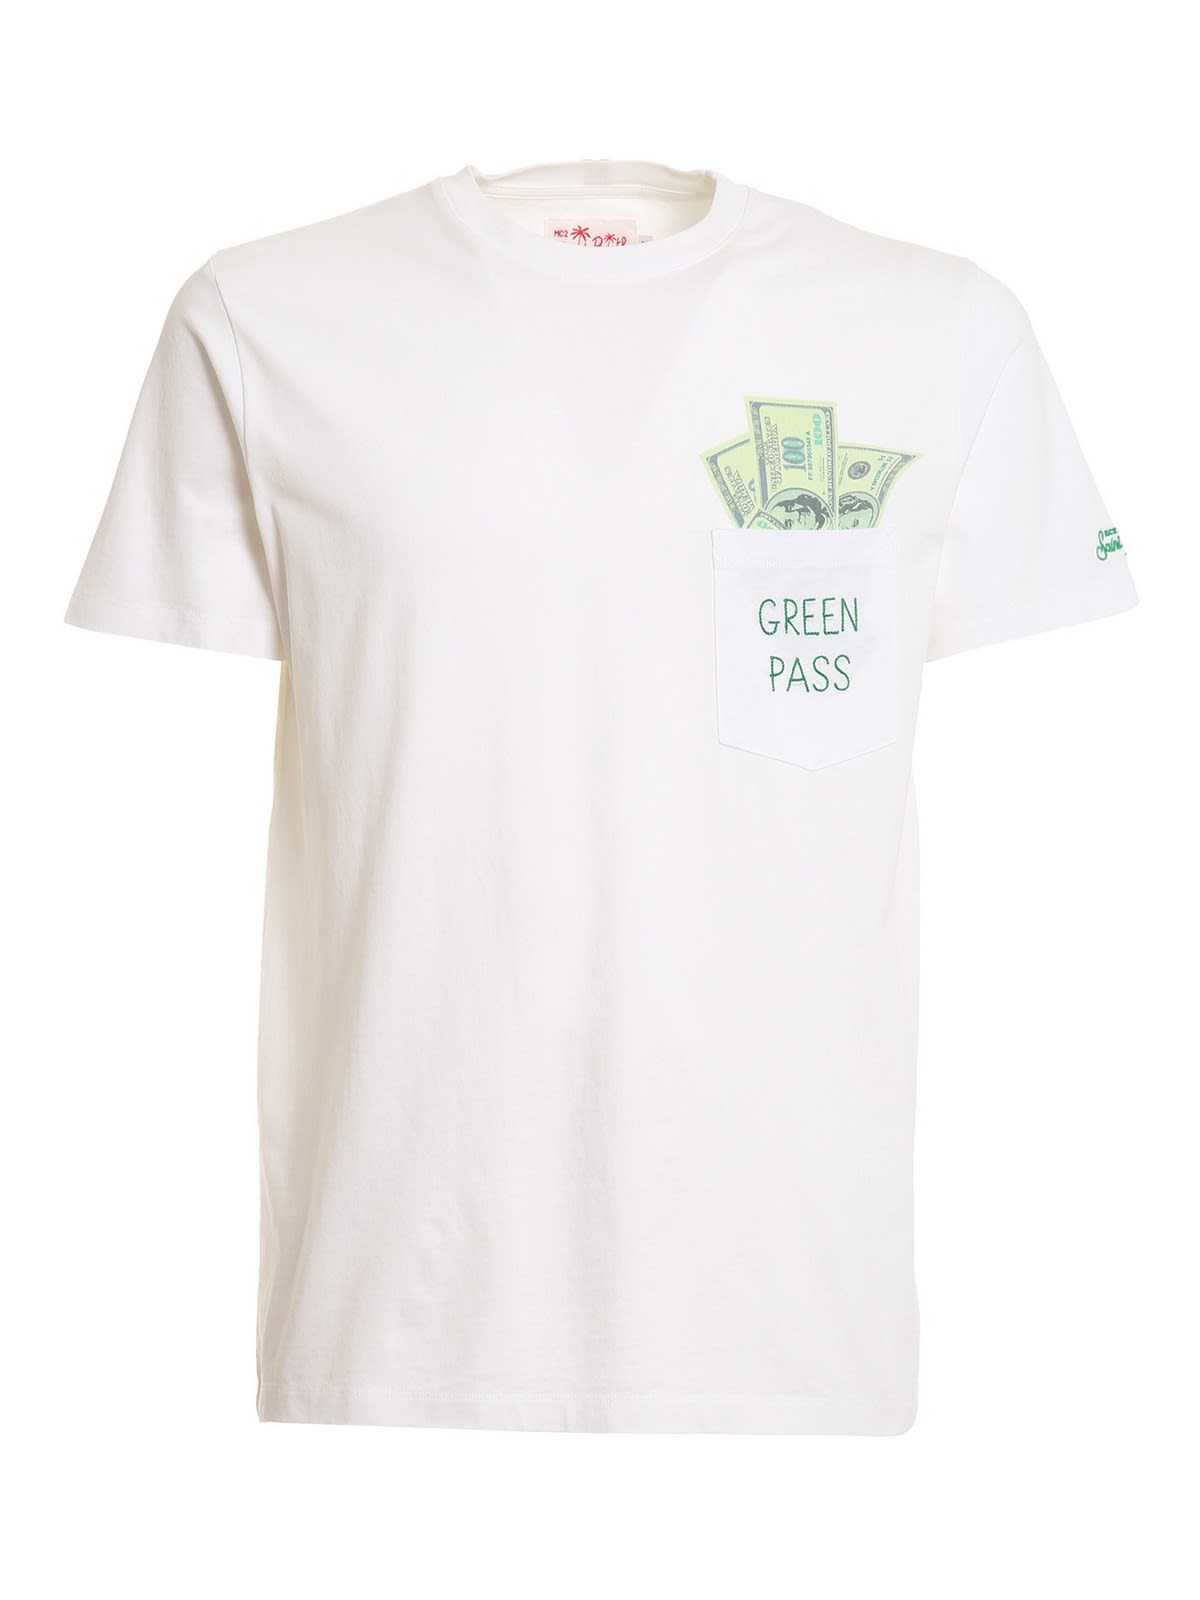 MC2 Saint Barth T-shirt Green Pass Bianca Austin02802b